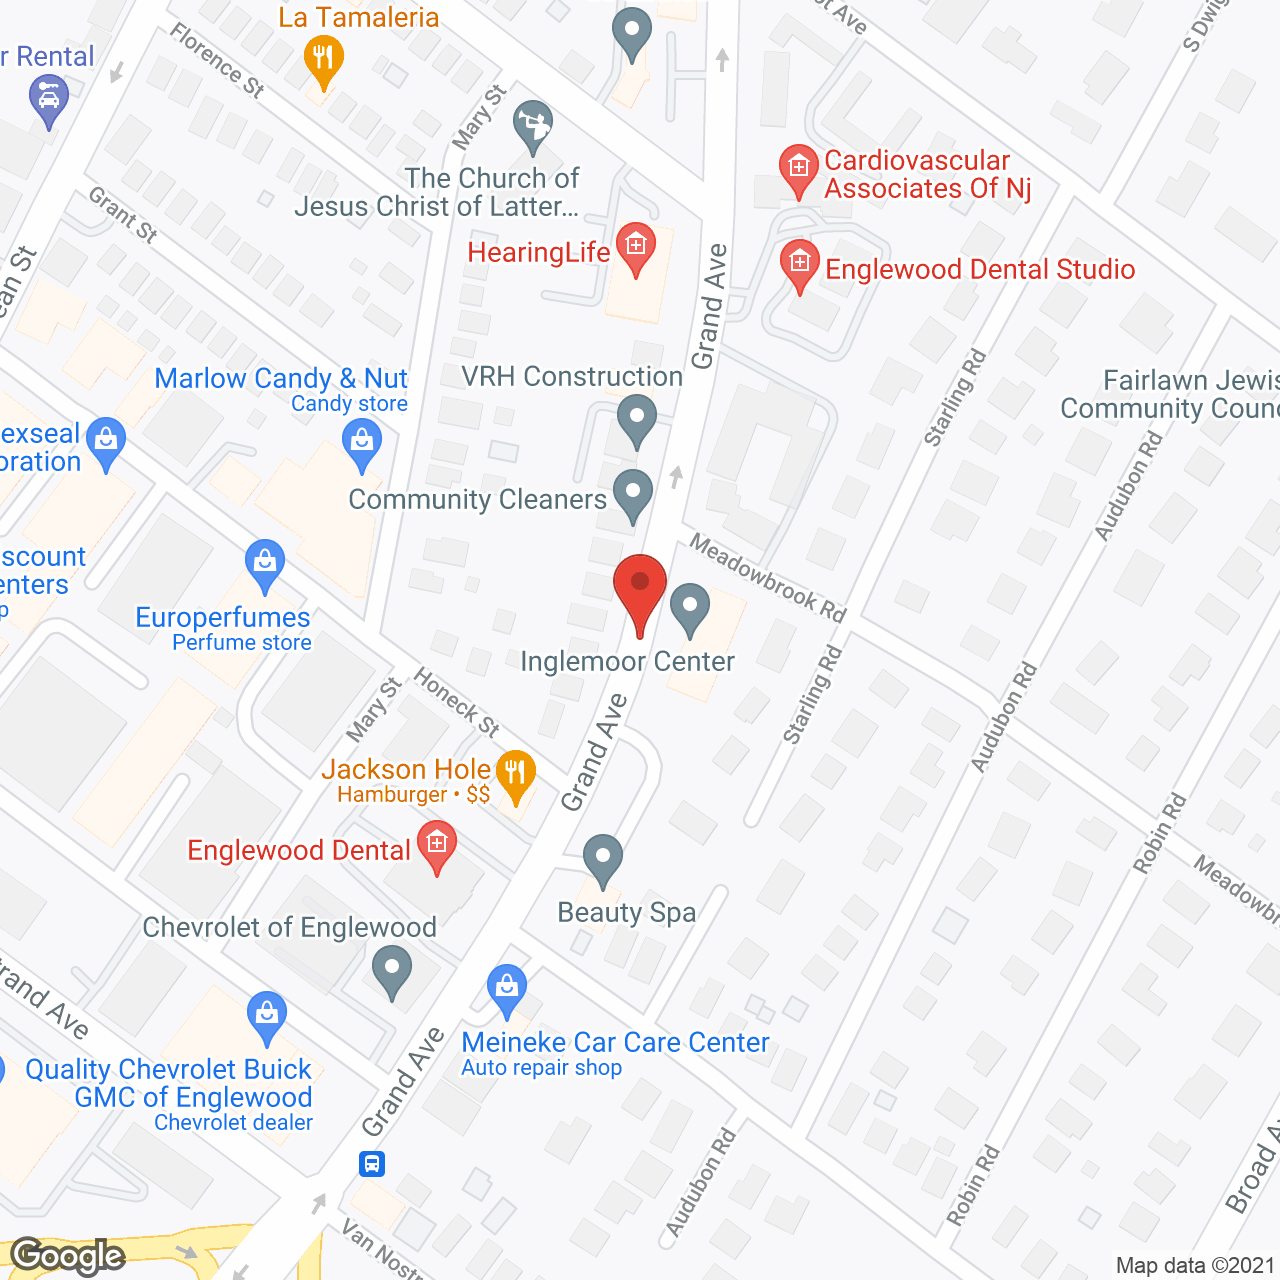 Inglemoor Center in google map